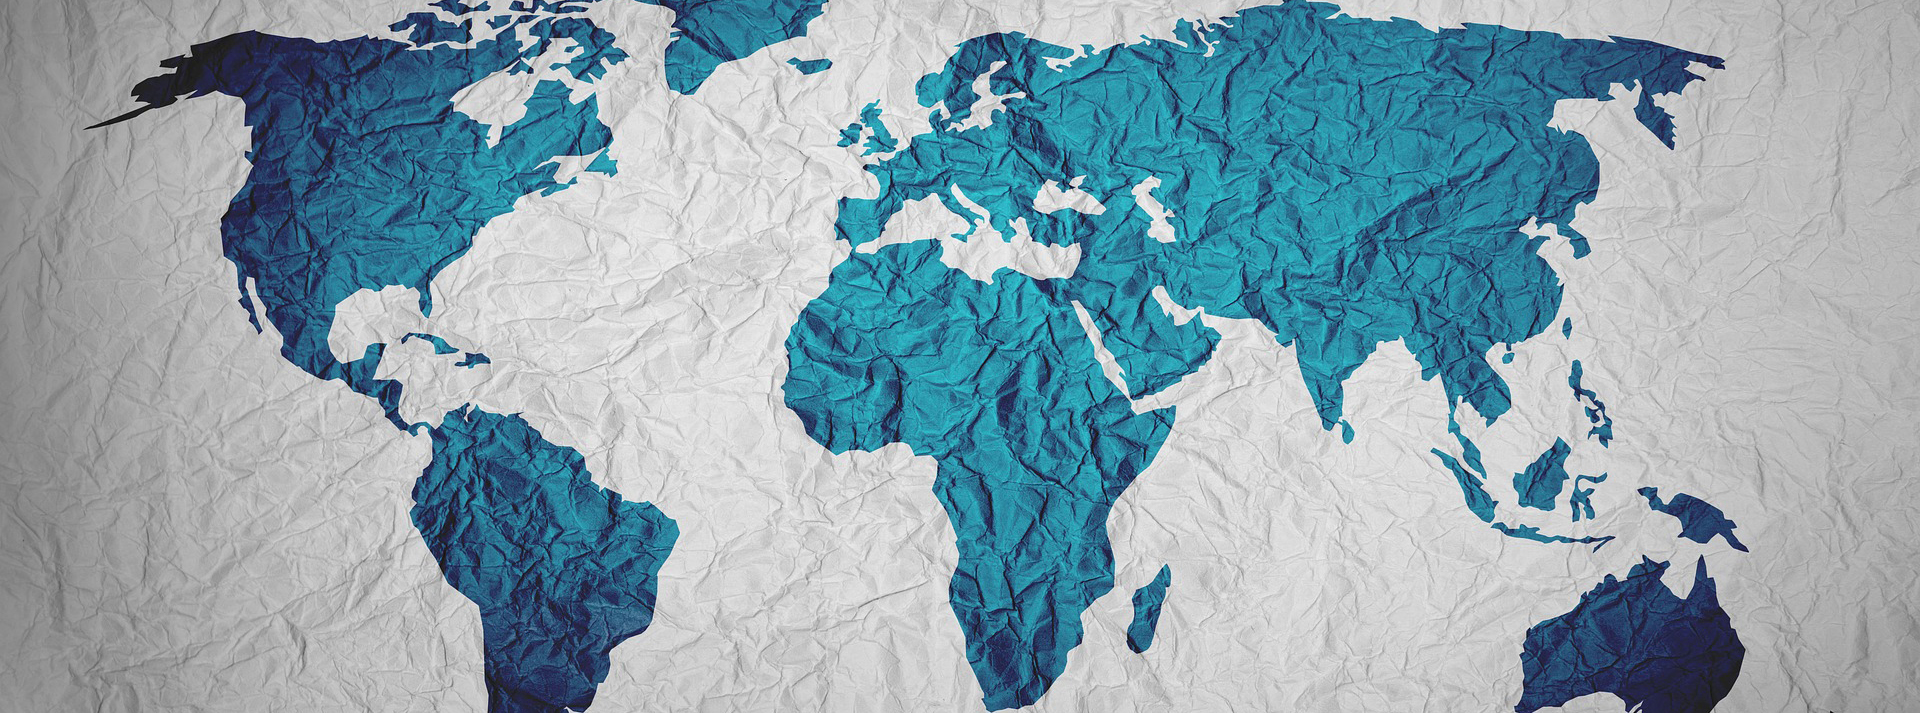 Crumpled World Map